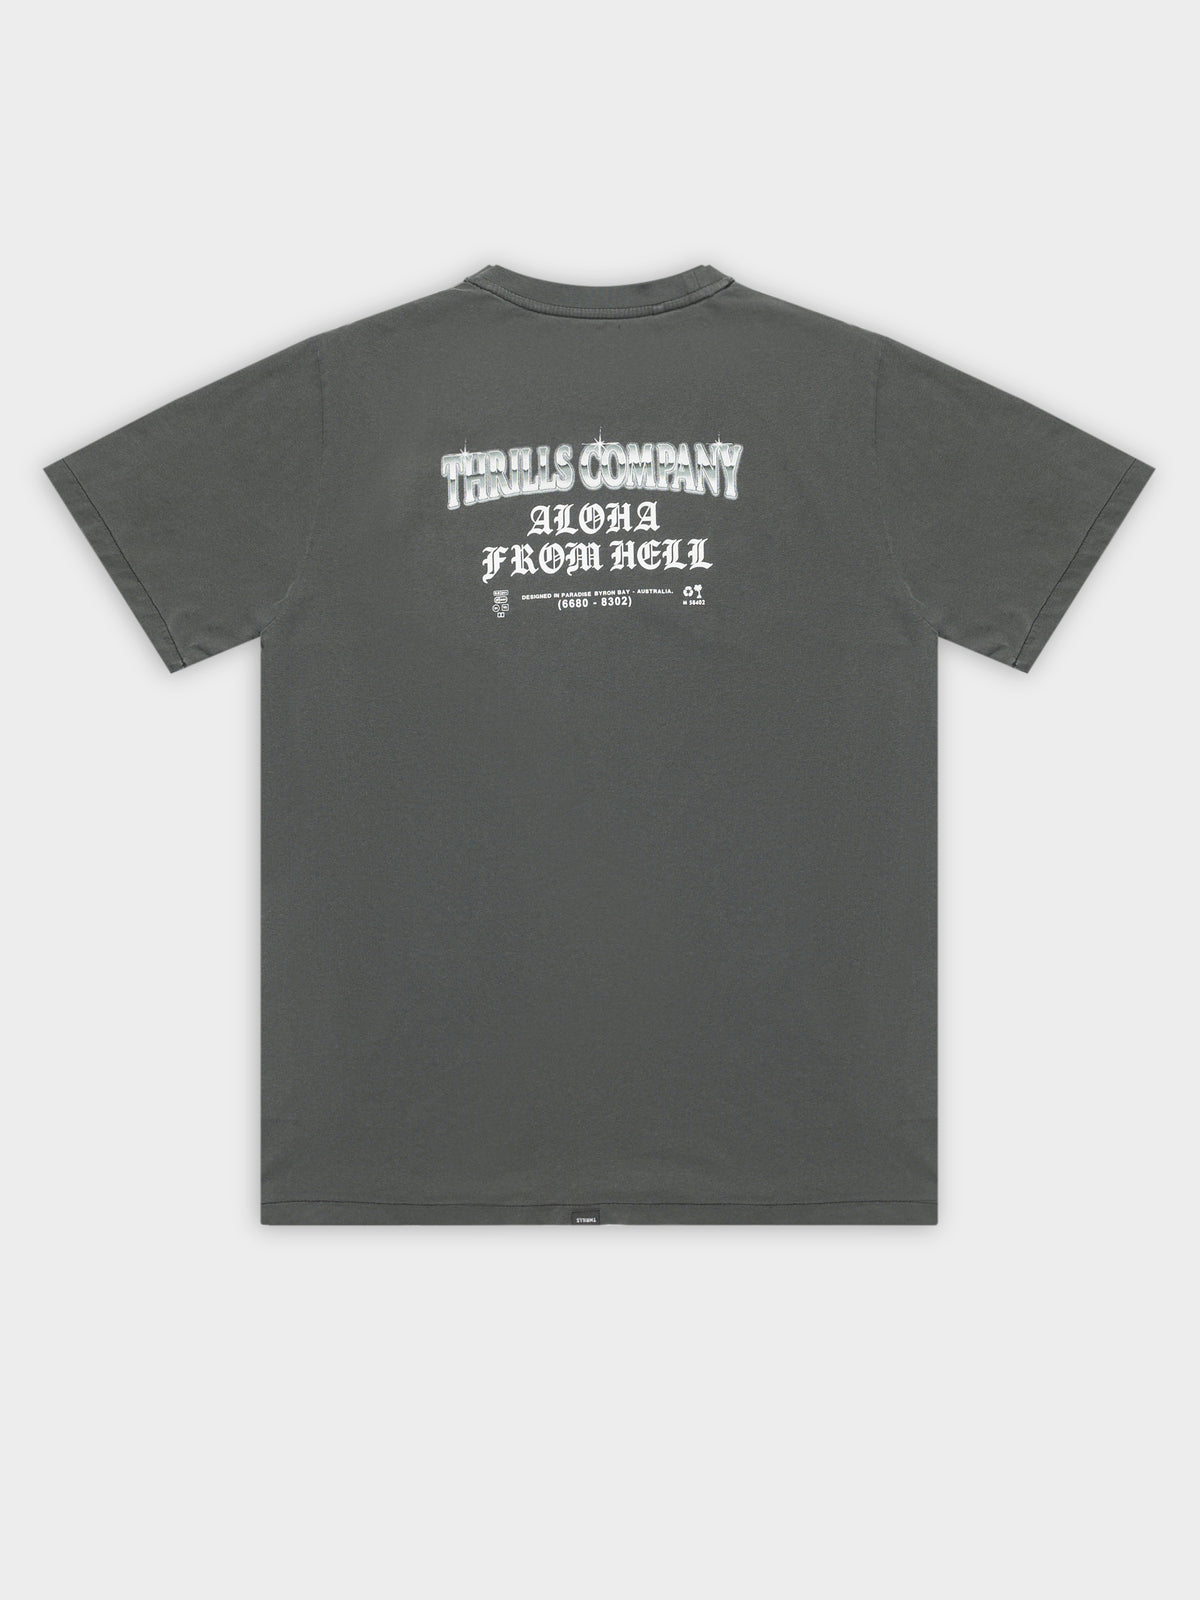 Chrome Cobra Merch Fit T-Shirt in Merch Black